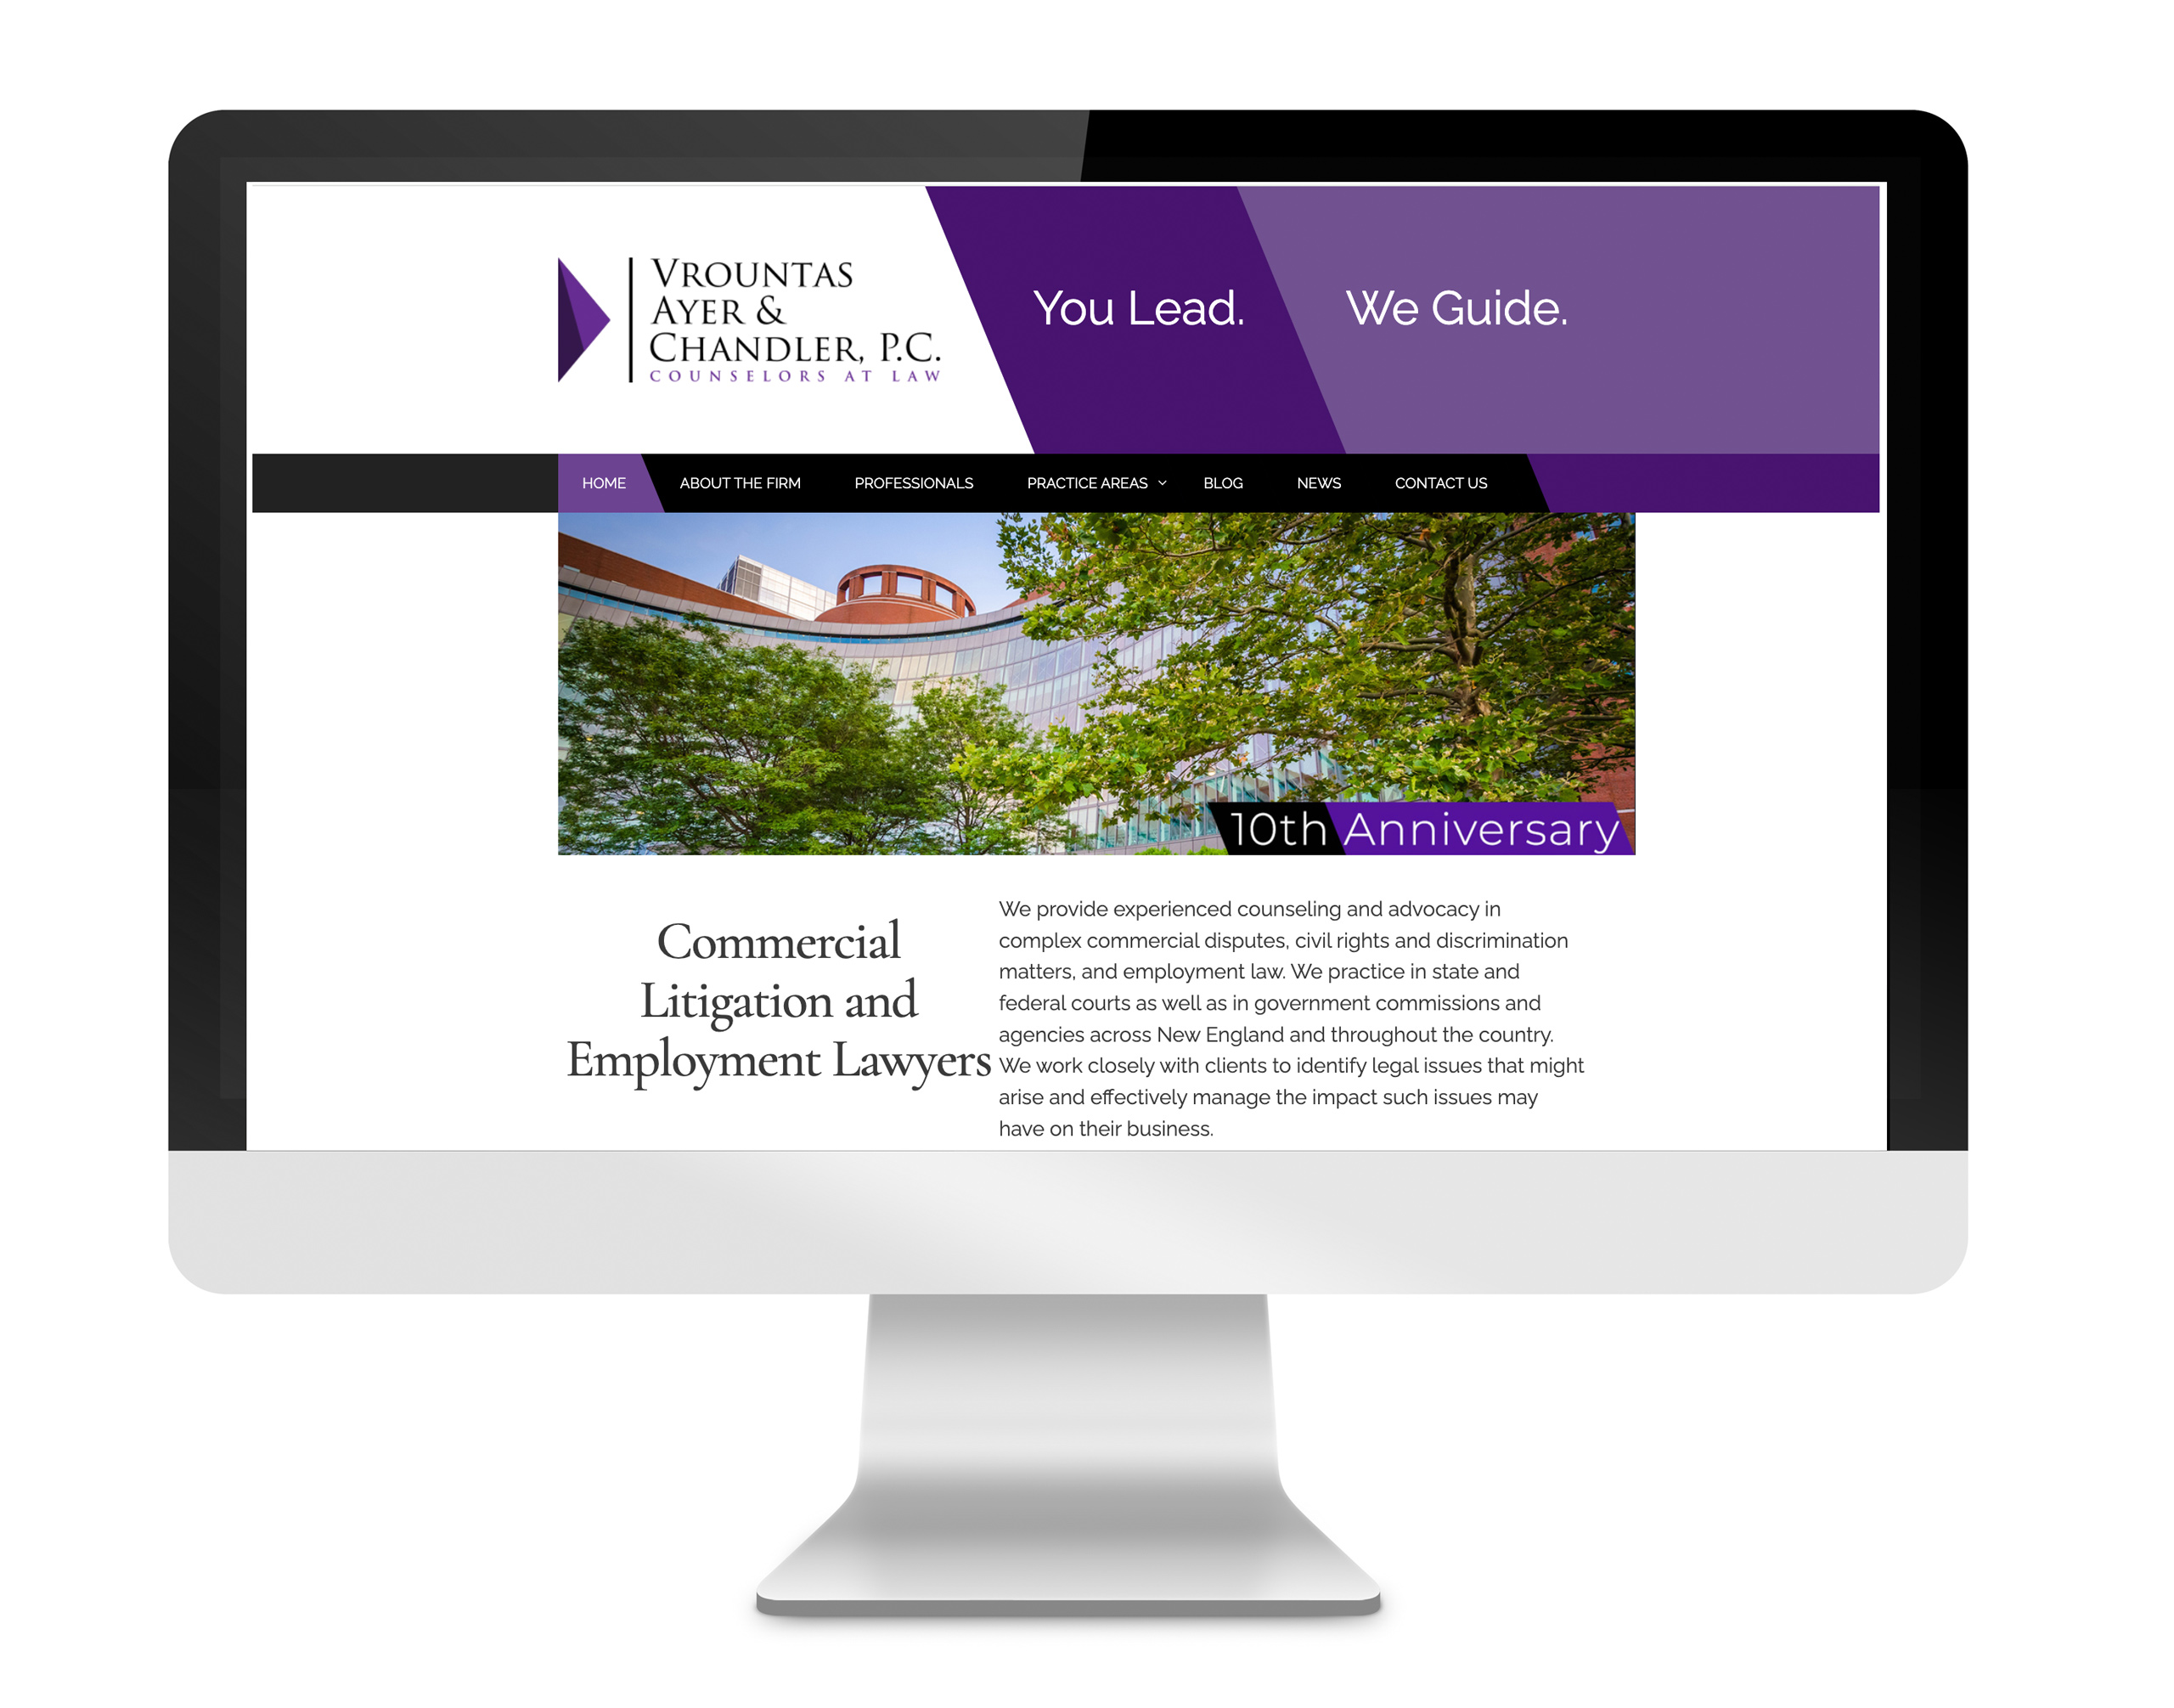 Vrountas Ayer & Chandler homepage designed by DLS Design